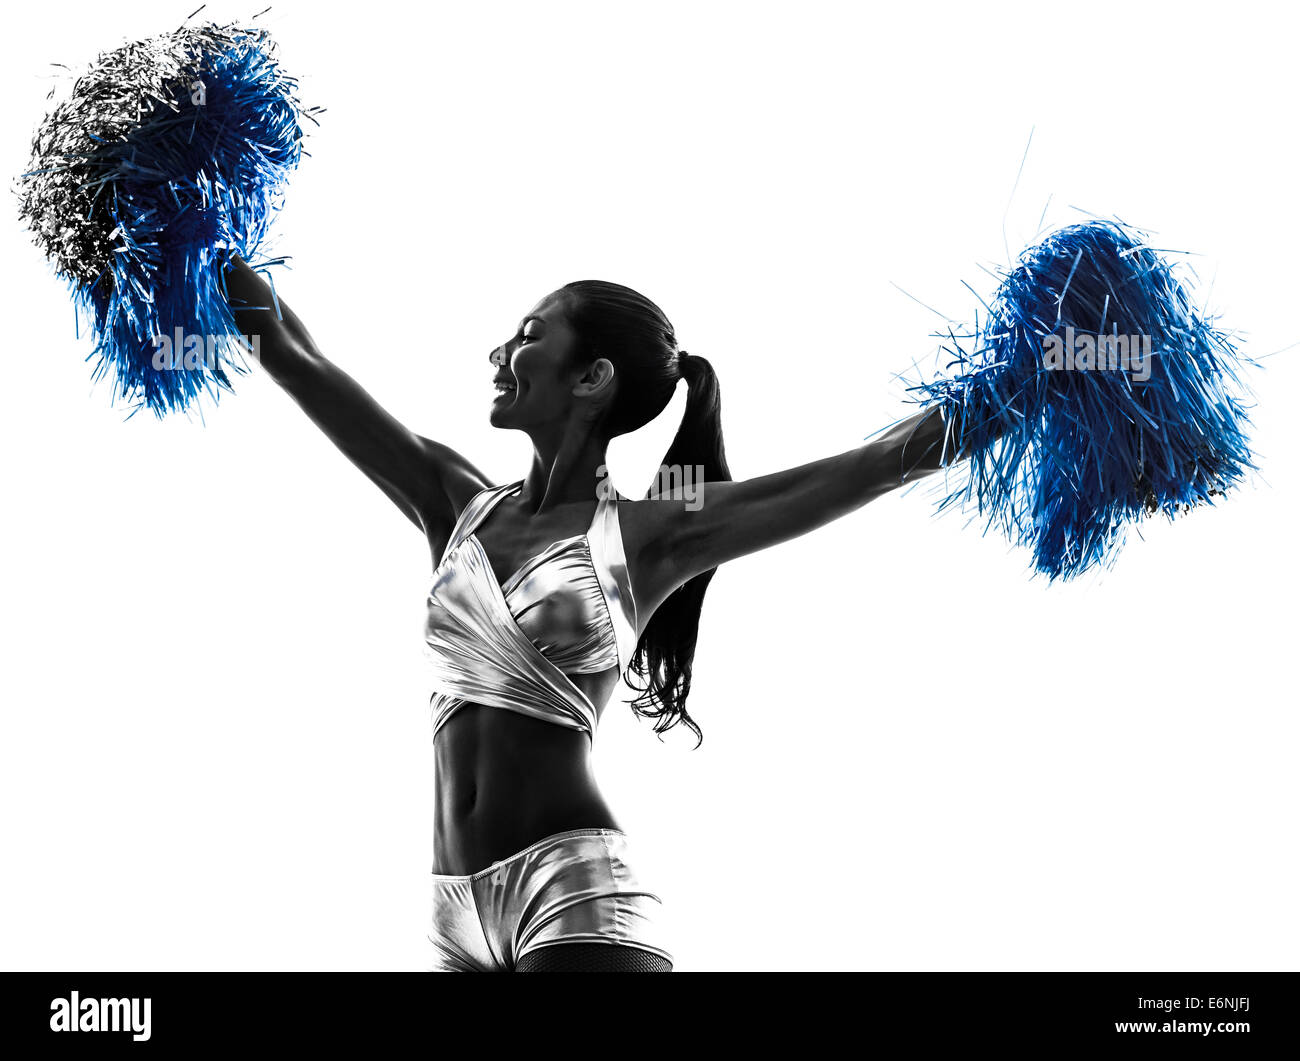 one young woman cheerleader cheerleading silhouette studio on white background Stock Photo